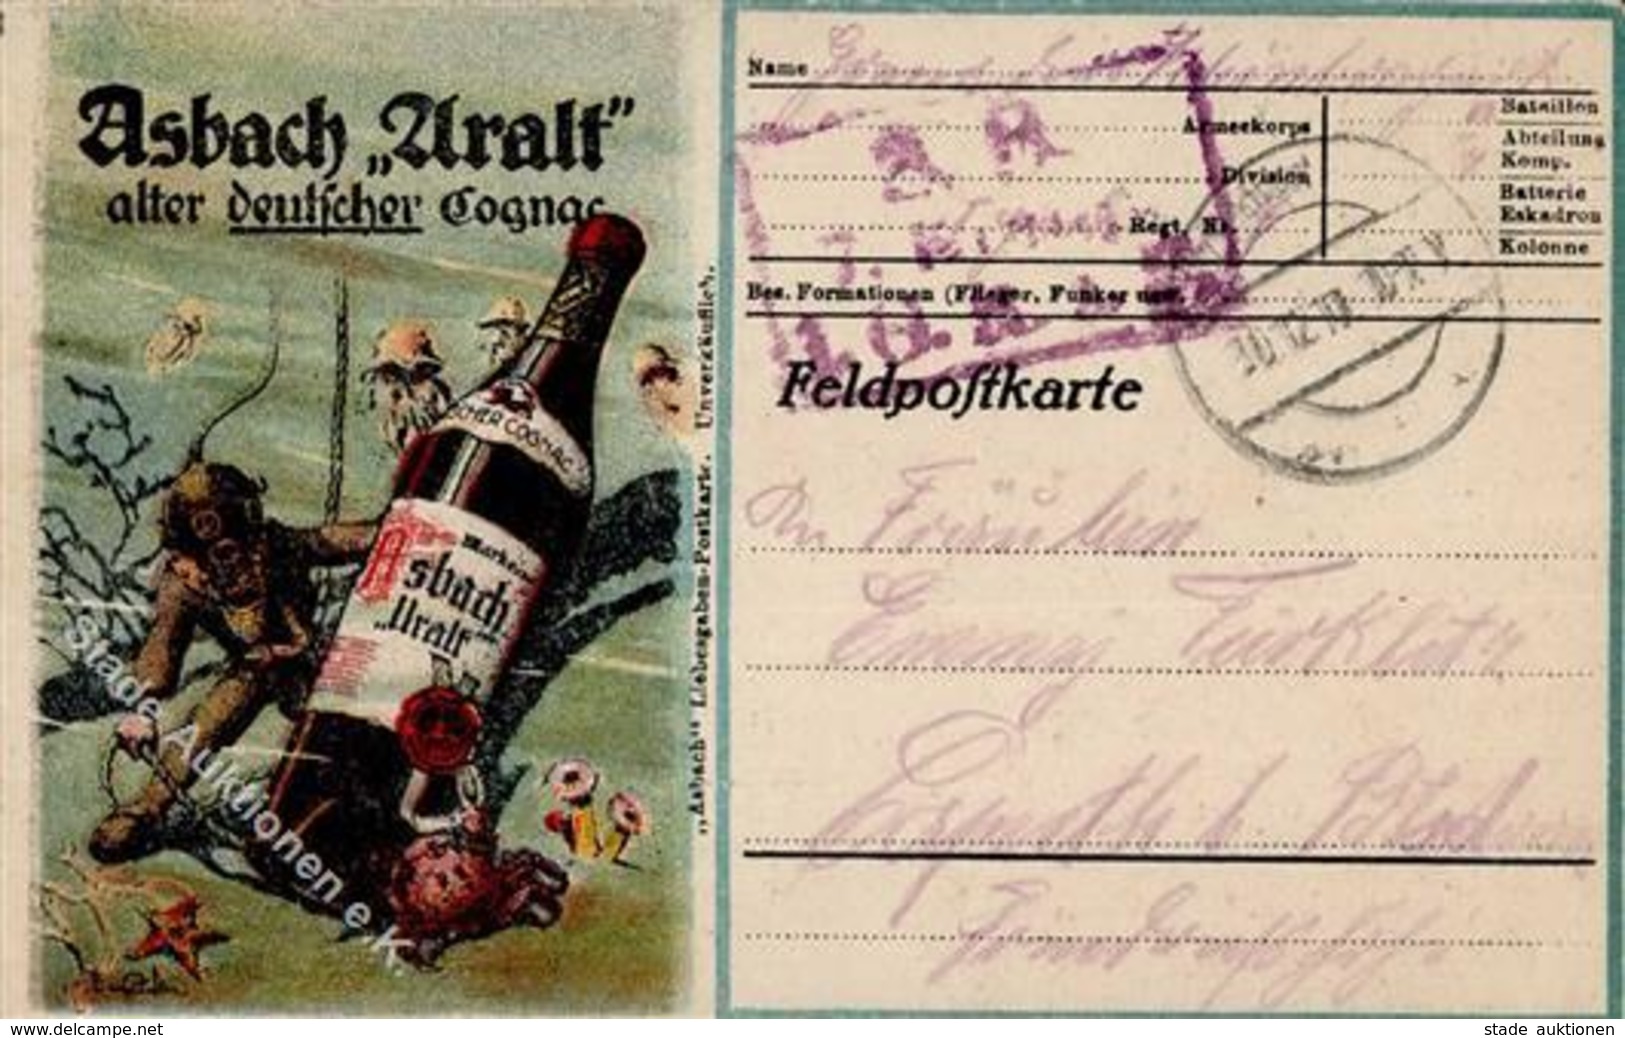 Werbung Asbach Uralt Feldpostkarte 1917 I-II Publicite - Advertising